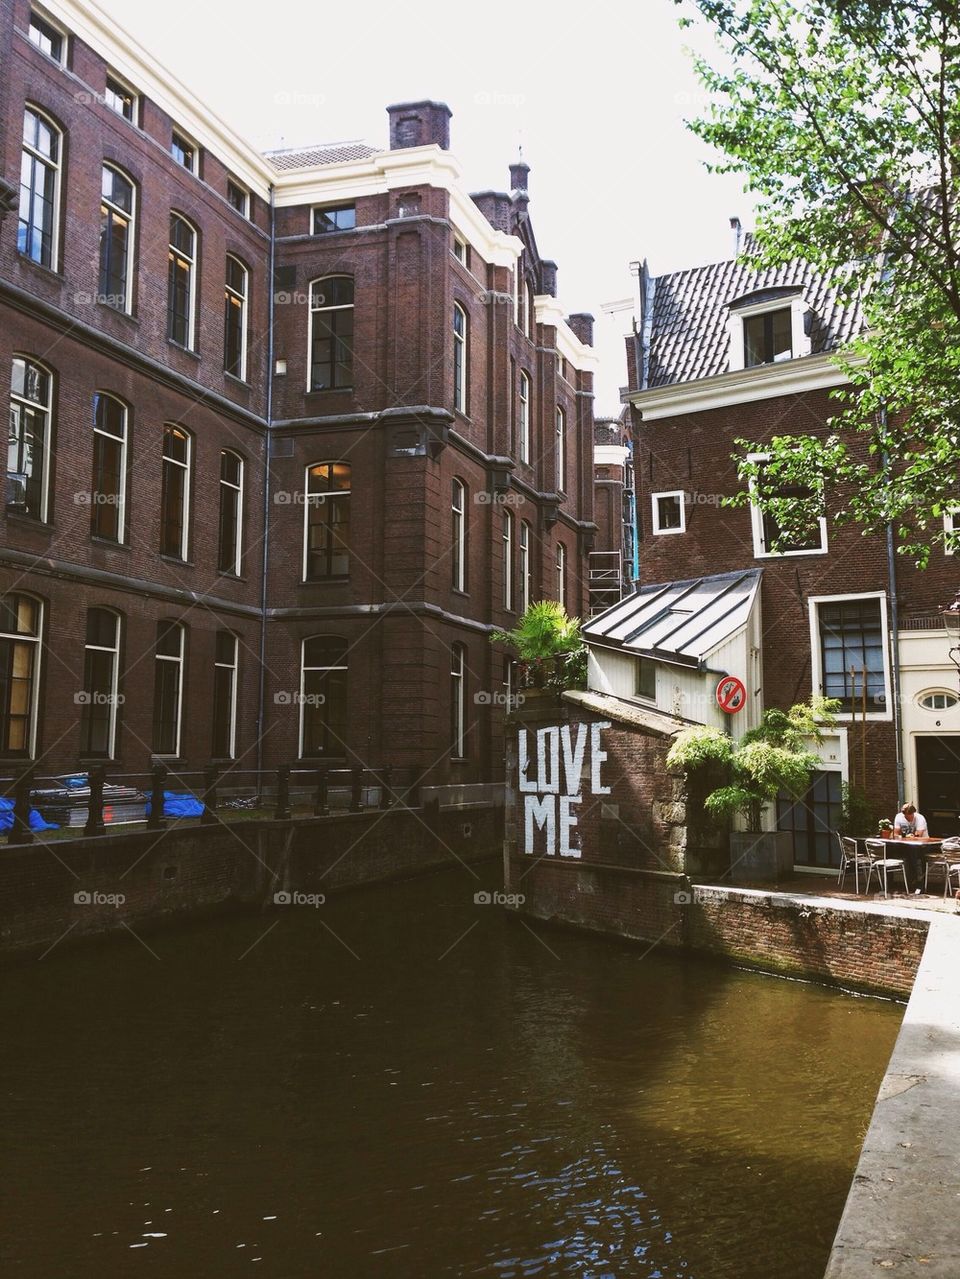 Finding Love in Amsterdam